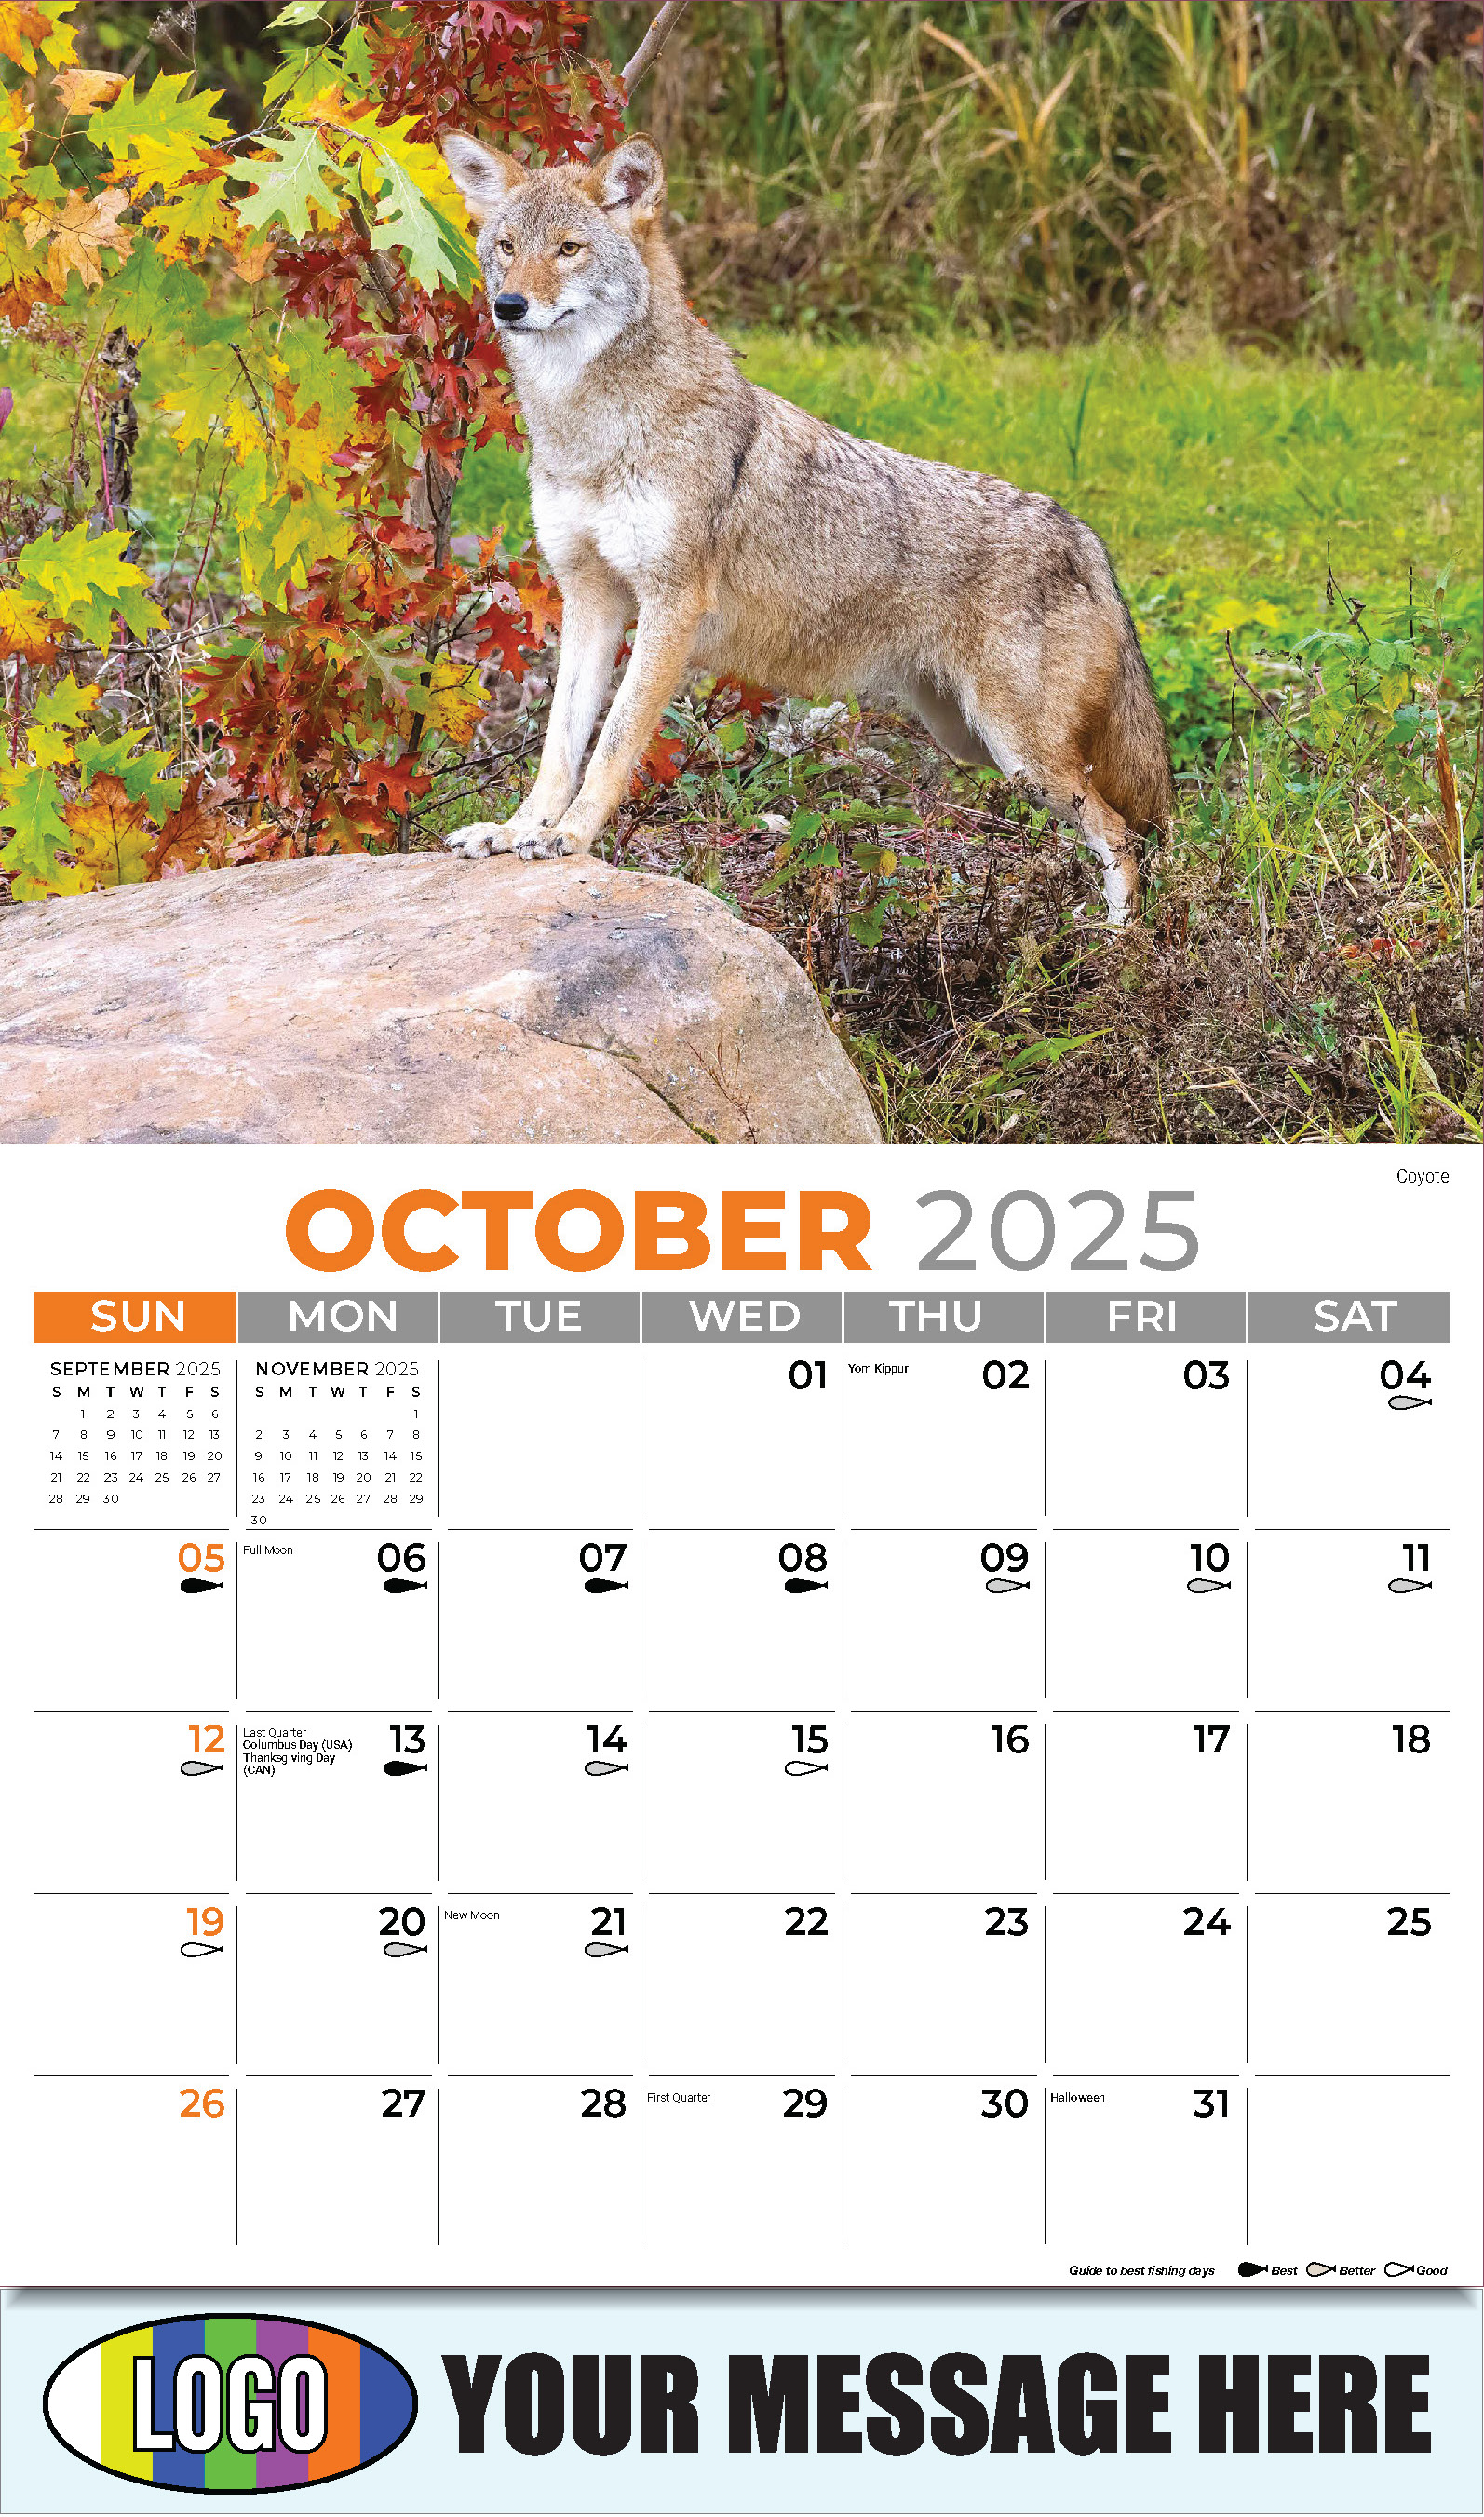 North American Wildlife 2025 Business Promo Wall Calendar - October